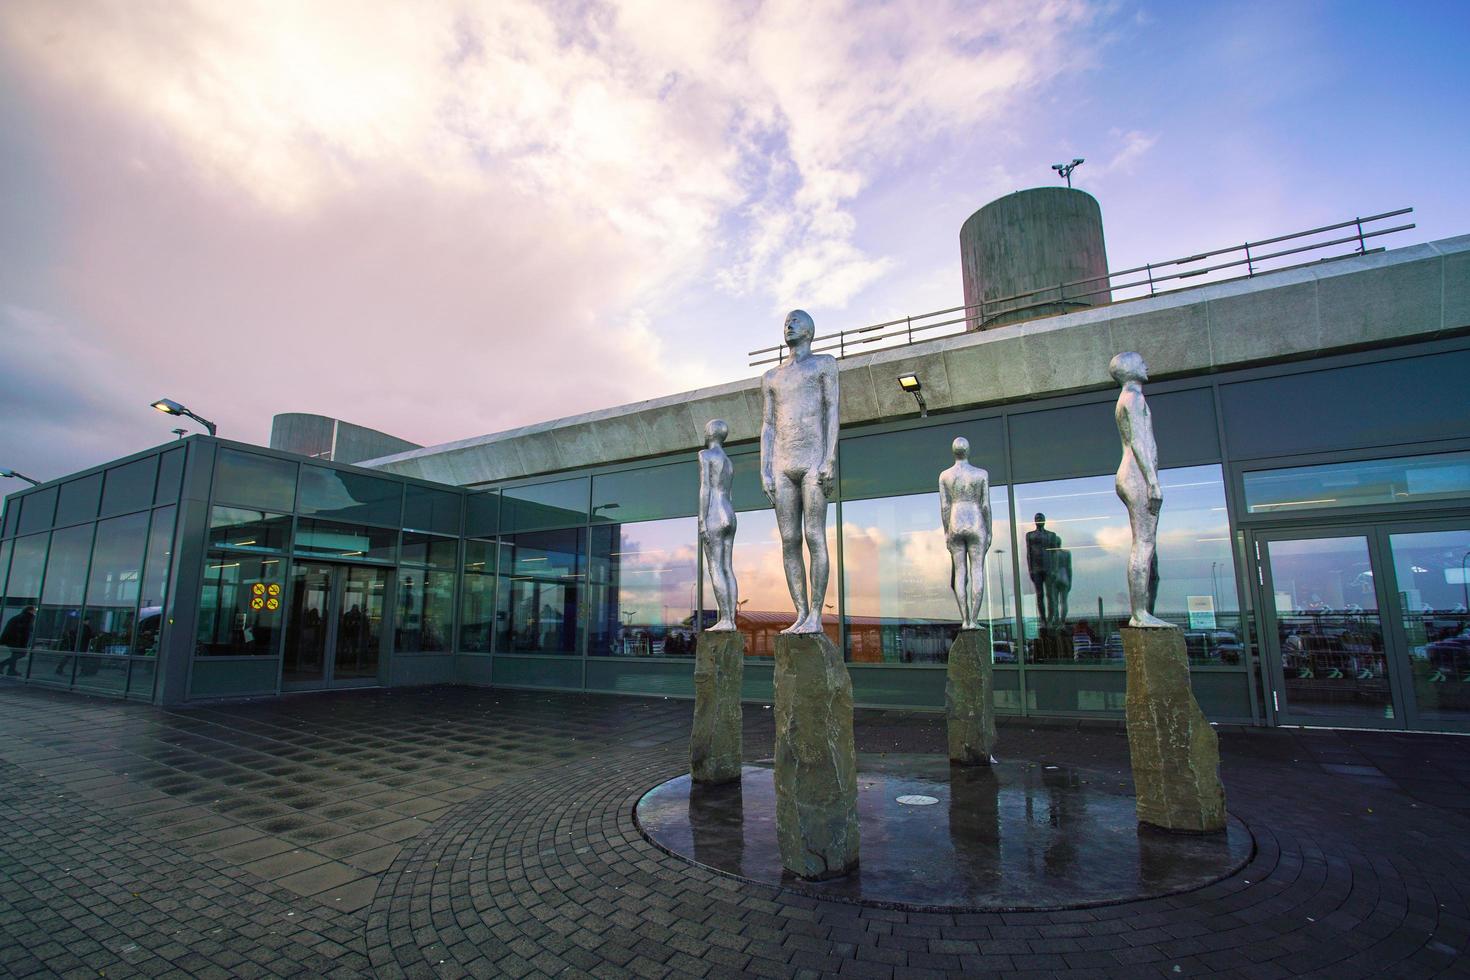 Reykjavik, Iceland - November 2, 2017 - Sculpture in front of Keflavik International Airport, also known as Reykjavik-Keflavik Airport photo